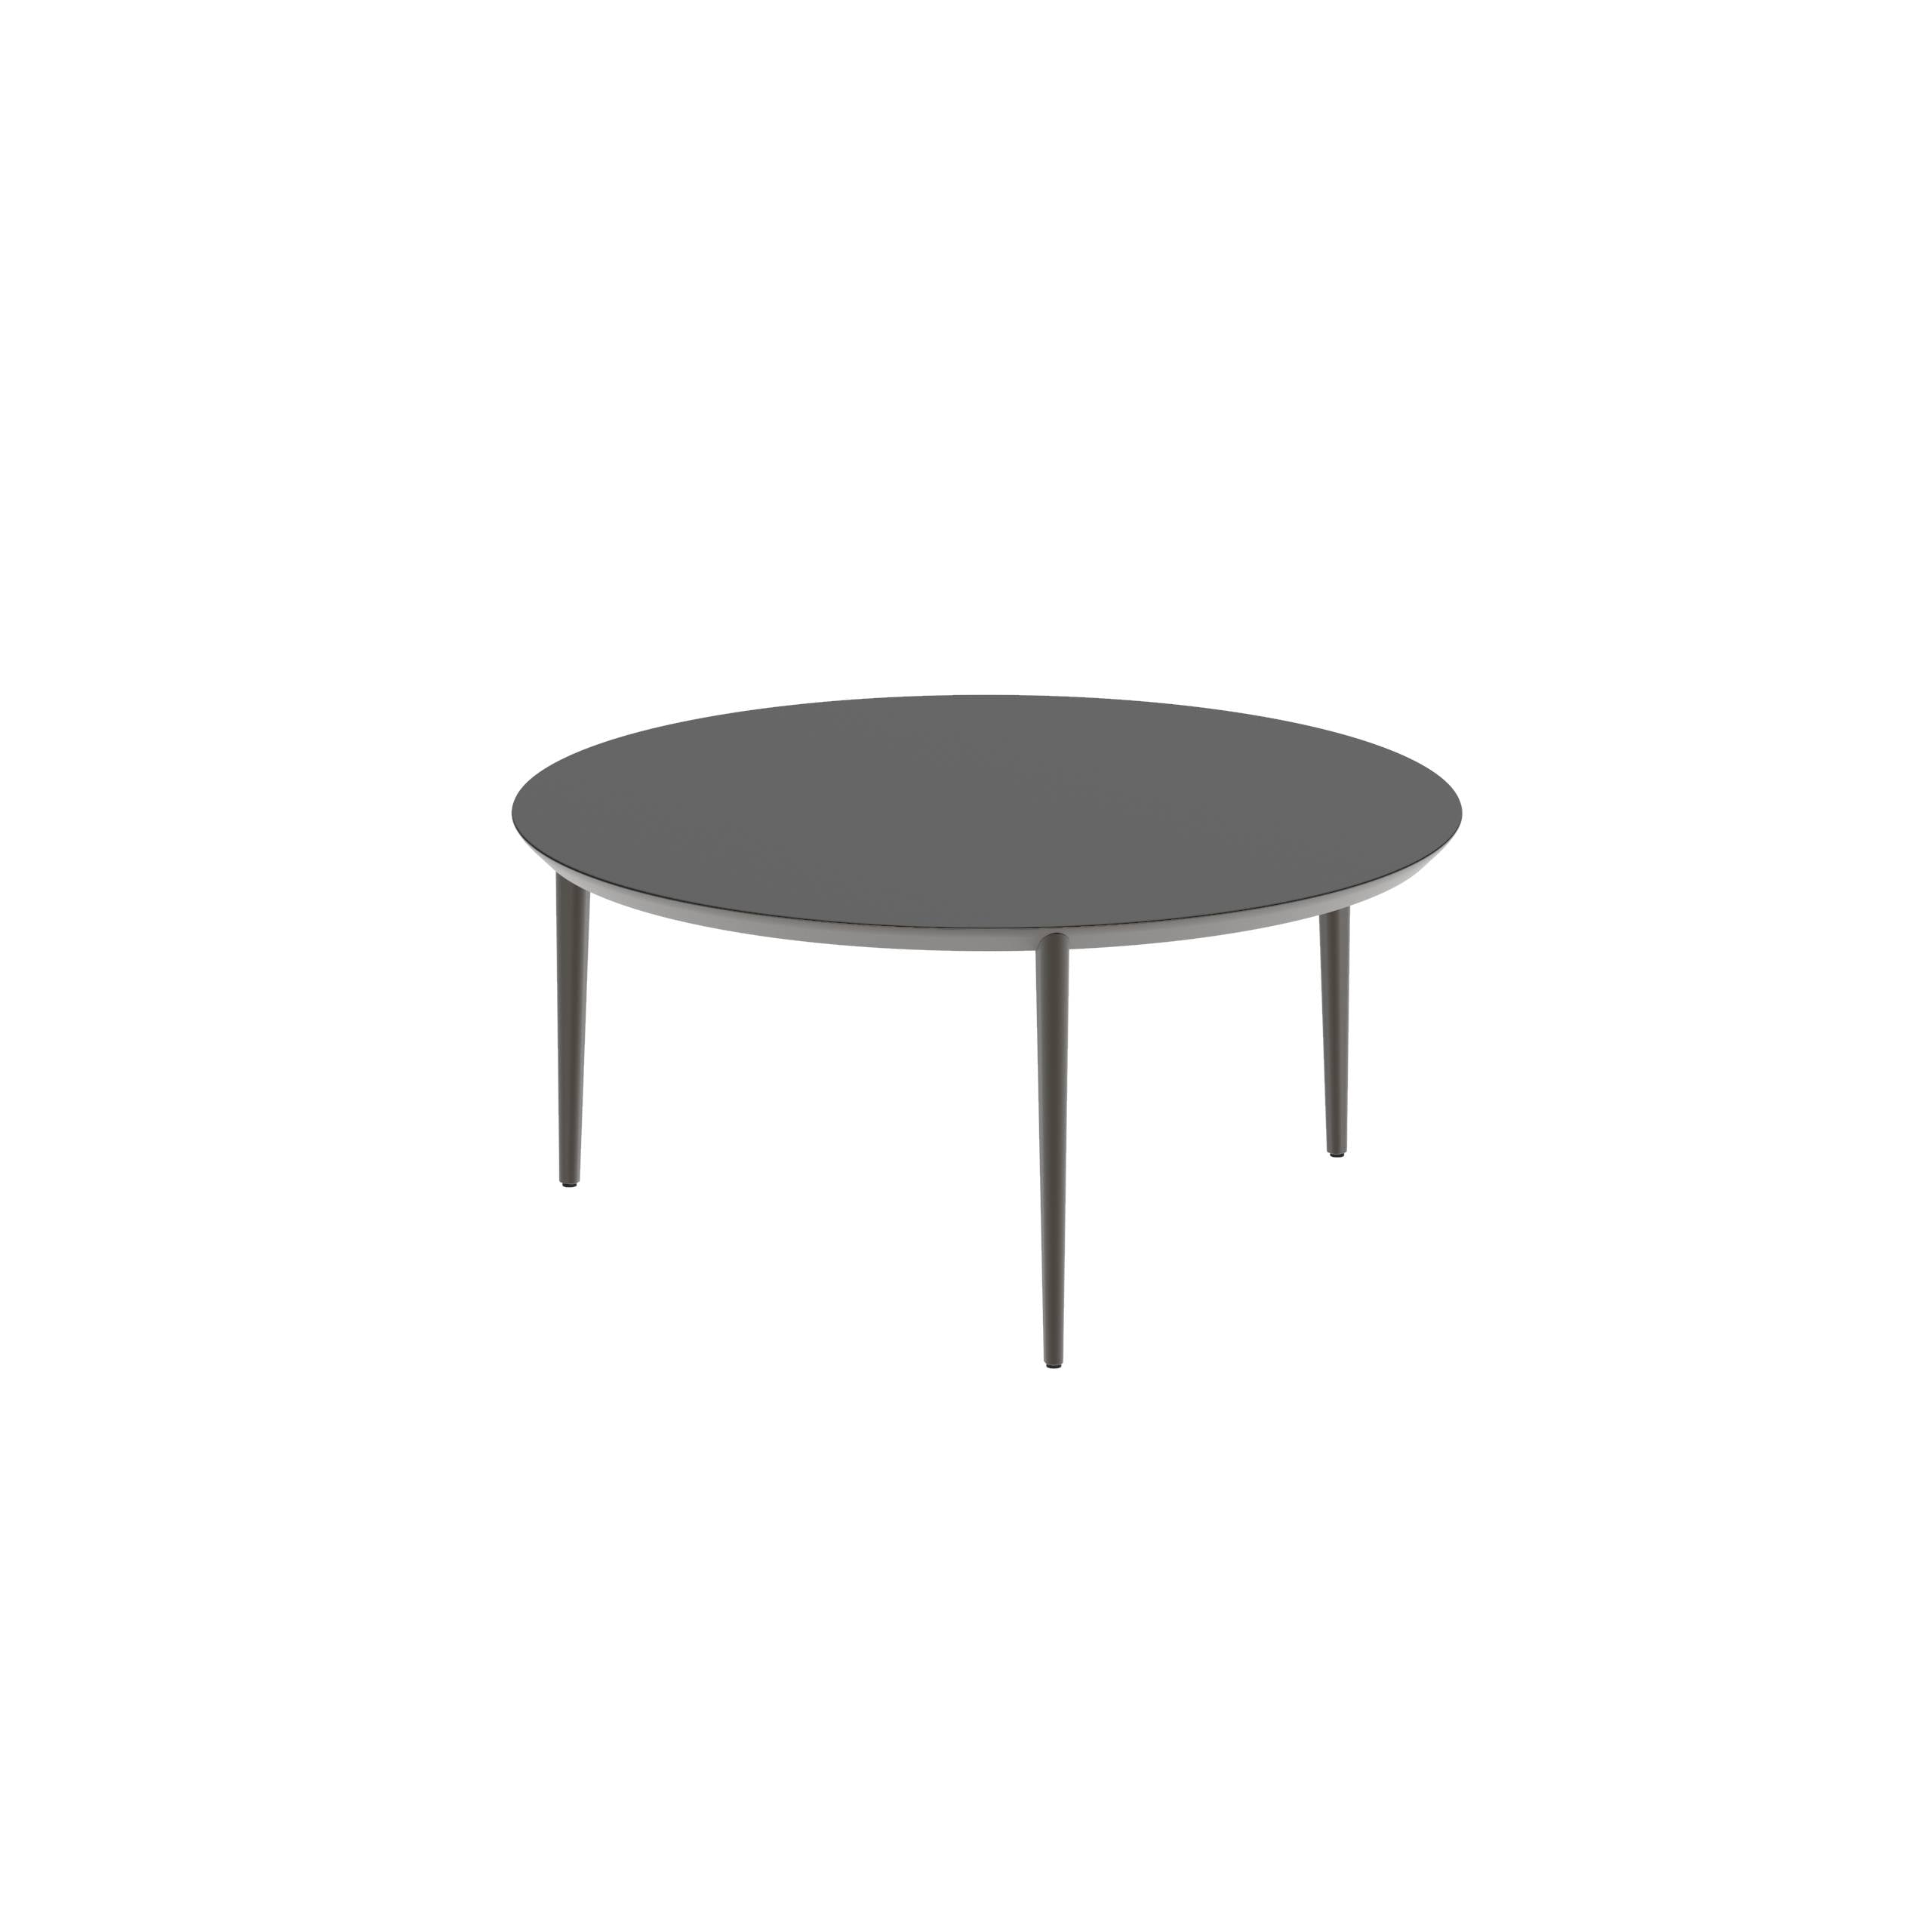 U-Nite Table Round Ø 160cm Alu Legs Bronze - Table Top Ceramic Black